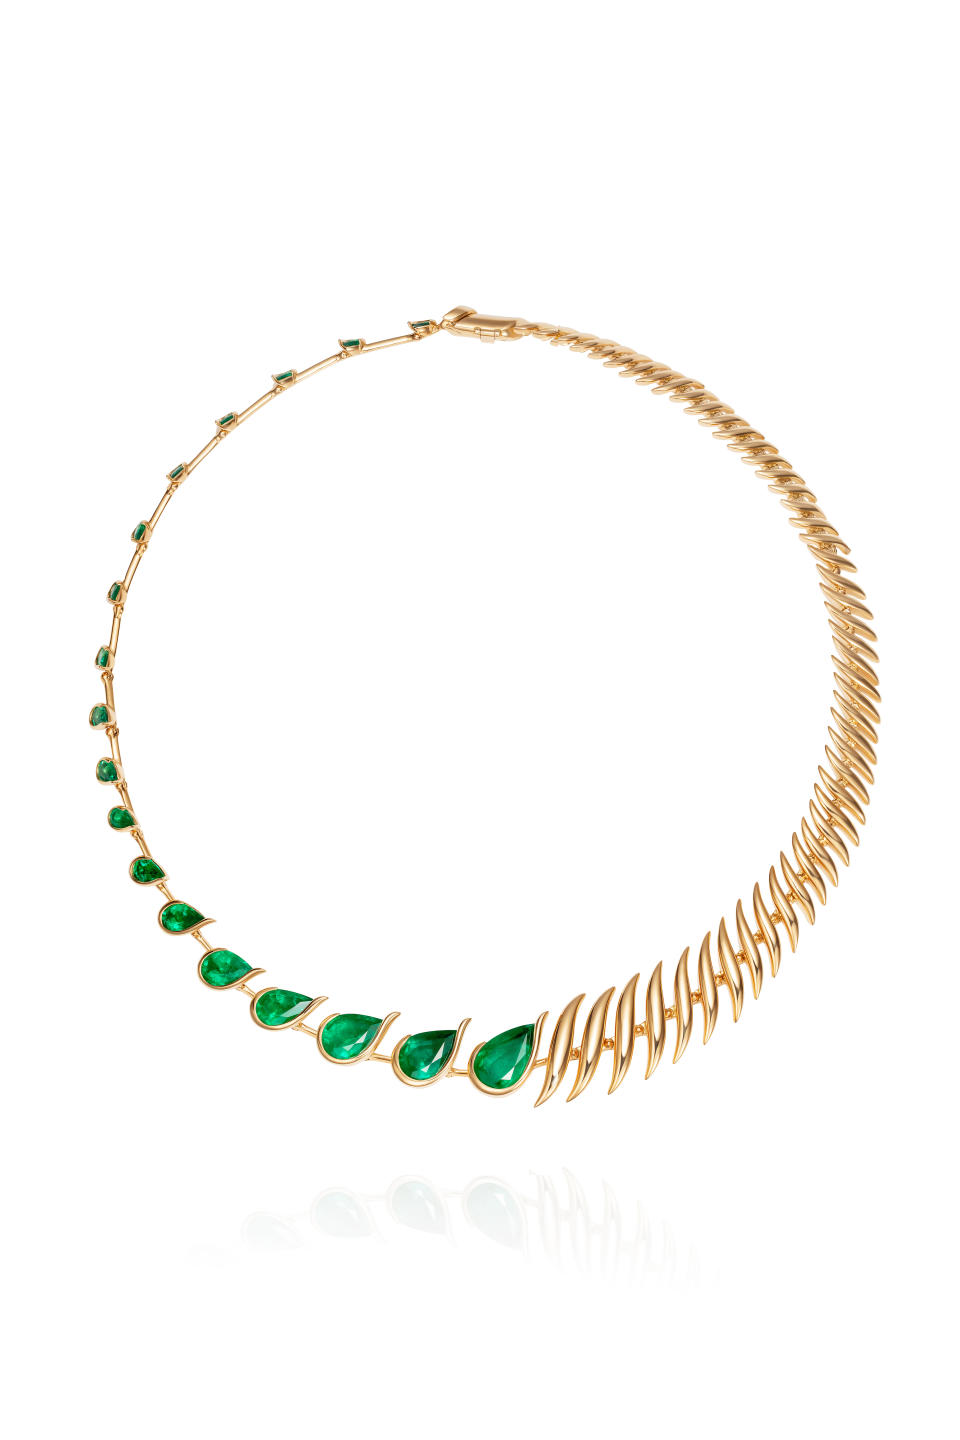 Fernando Jorge emerald and gold necklace, sold at Bergdorf Goodman. - Credit: Courtesy/Bergdorf Goodman